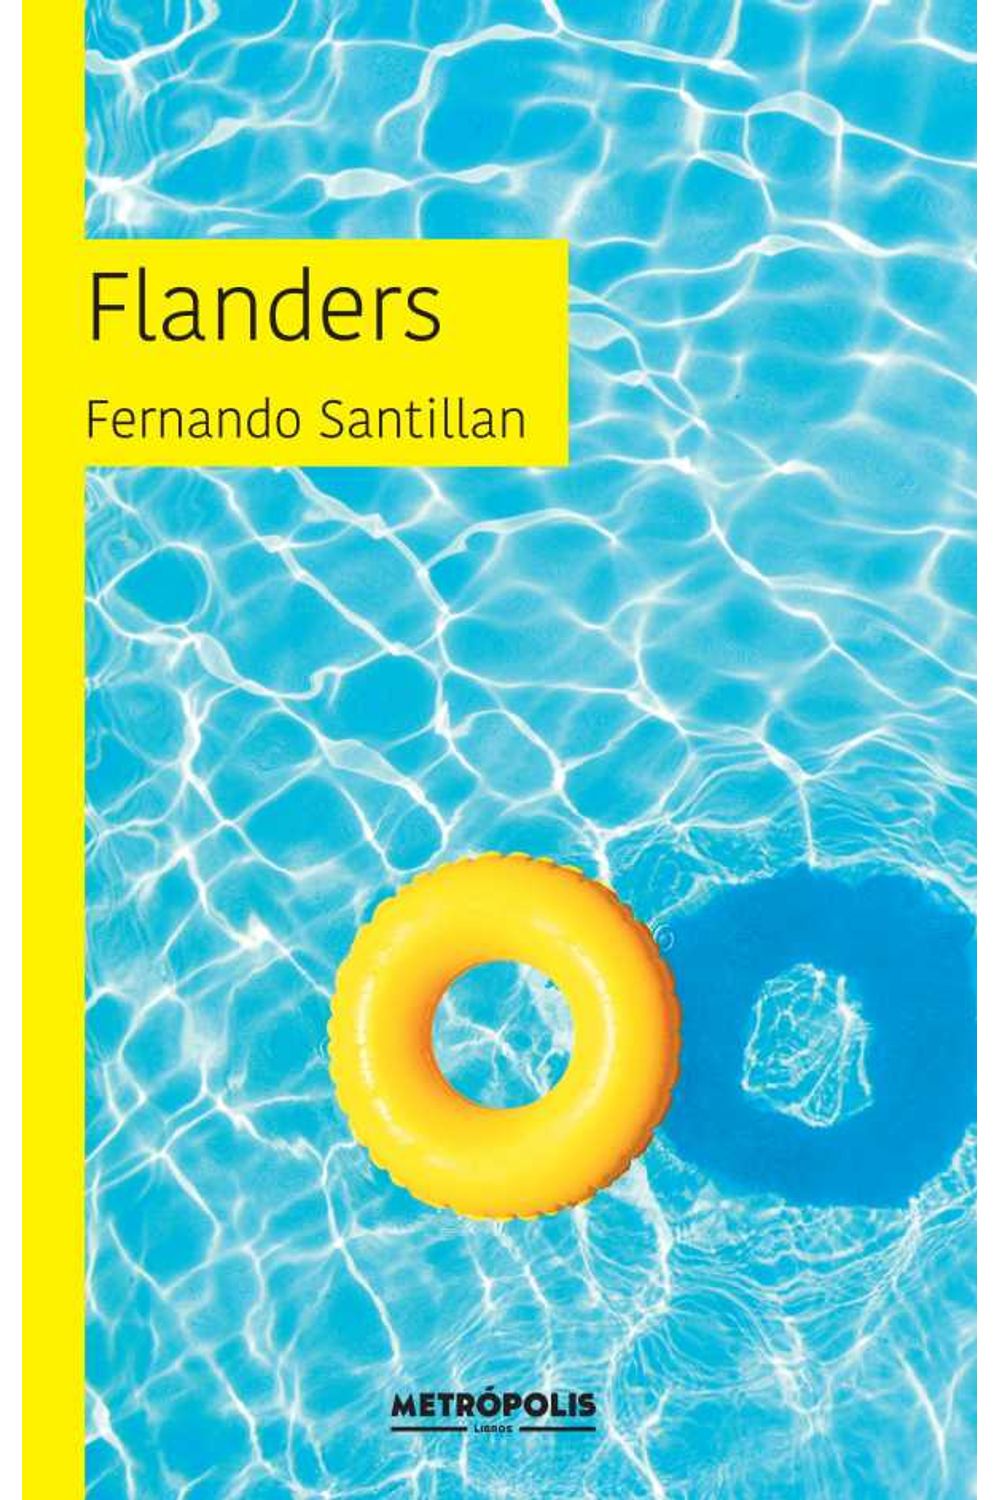 bw-flanders-metrpolis-libros-9789874188328